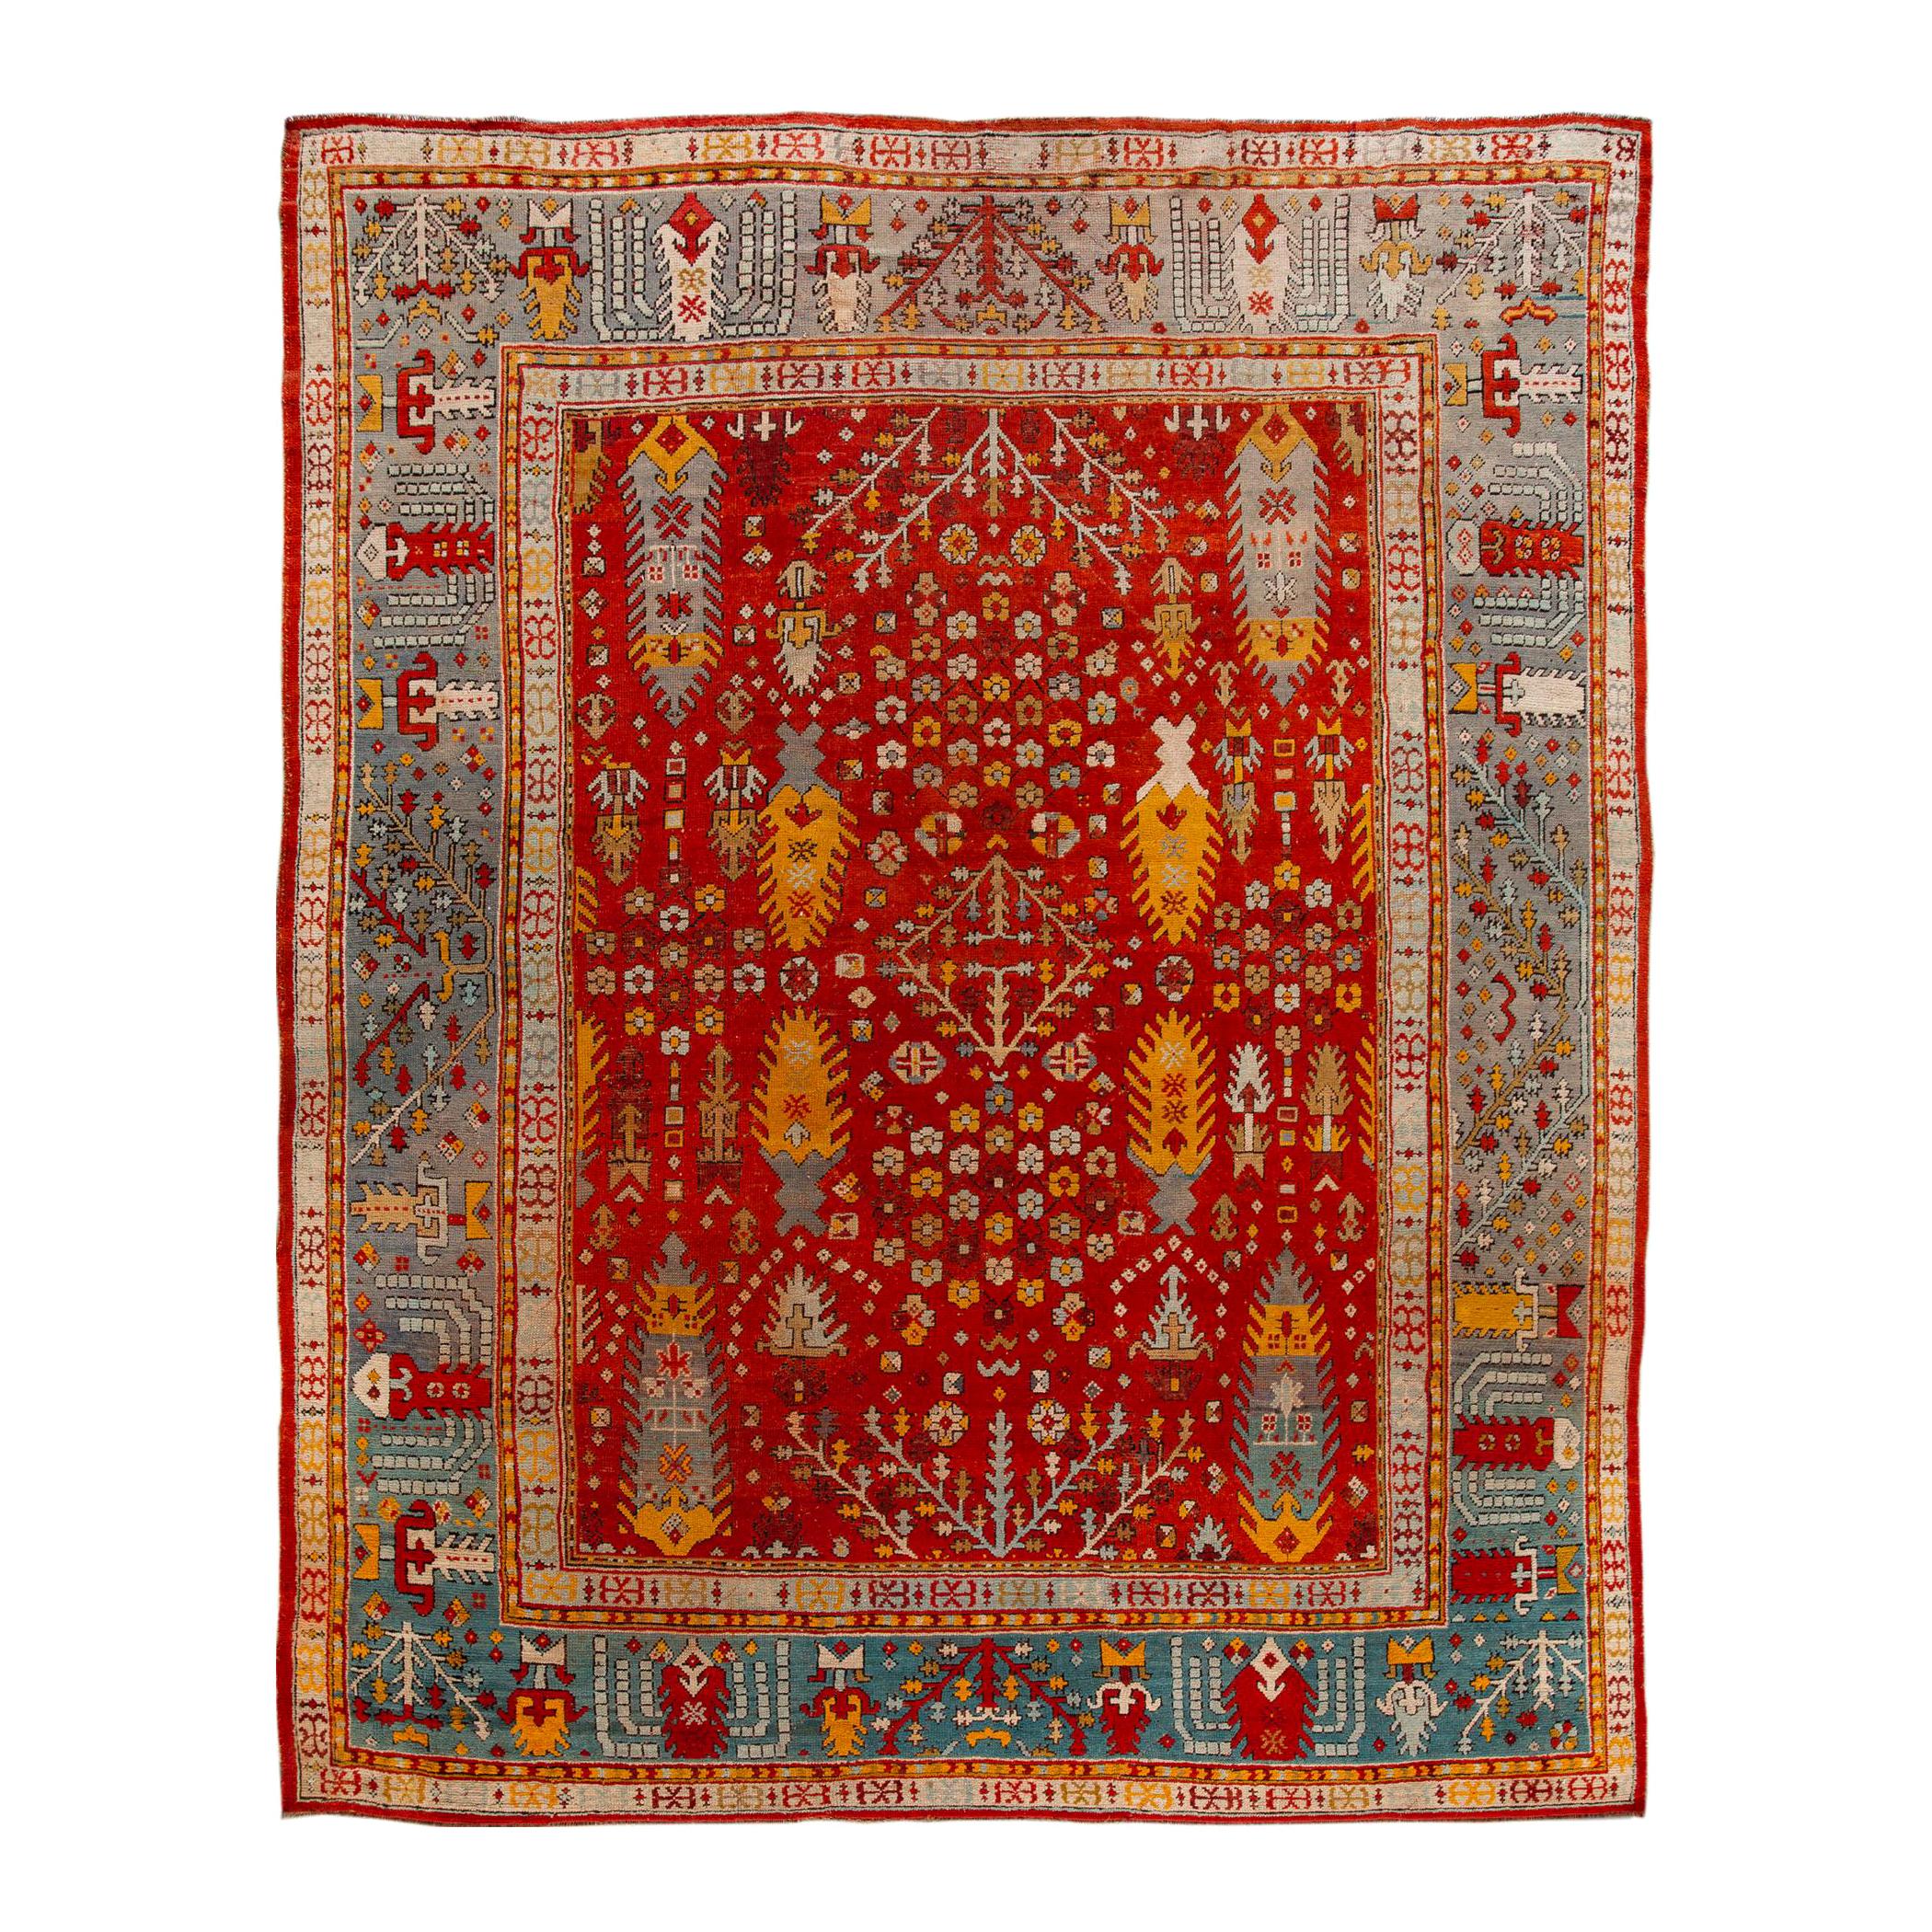 Late 19th Century Antique Turkish Oushak Wool Rug